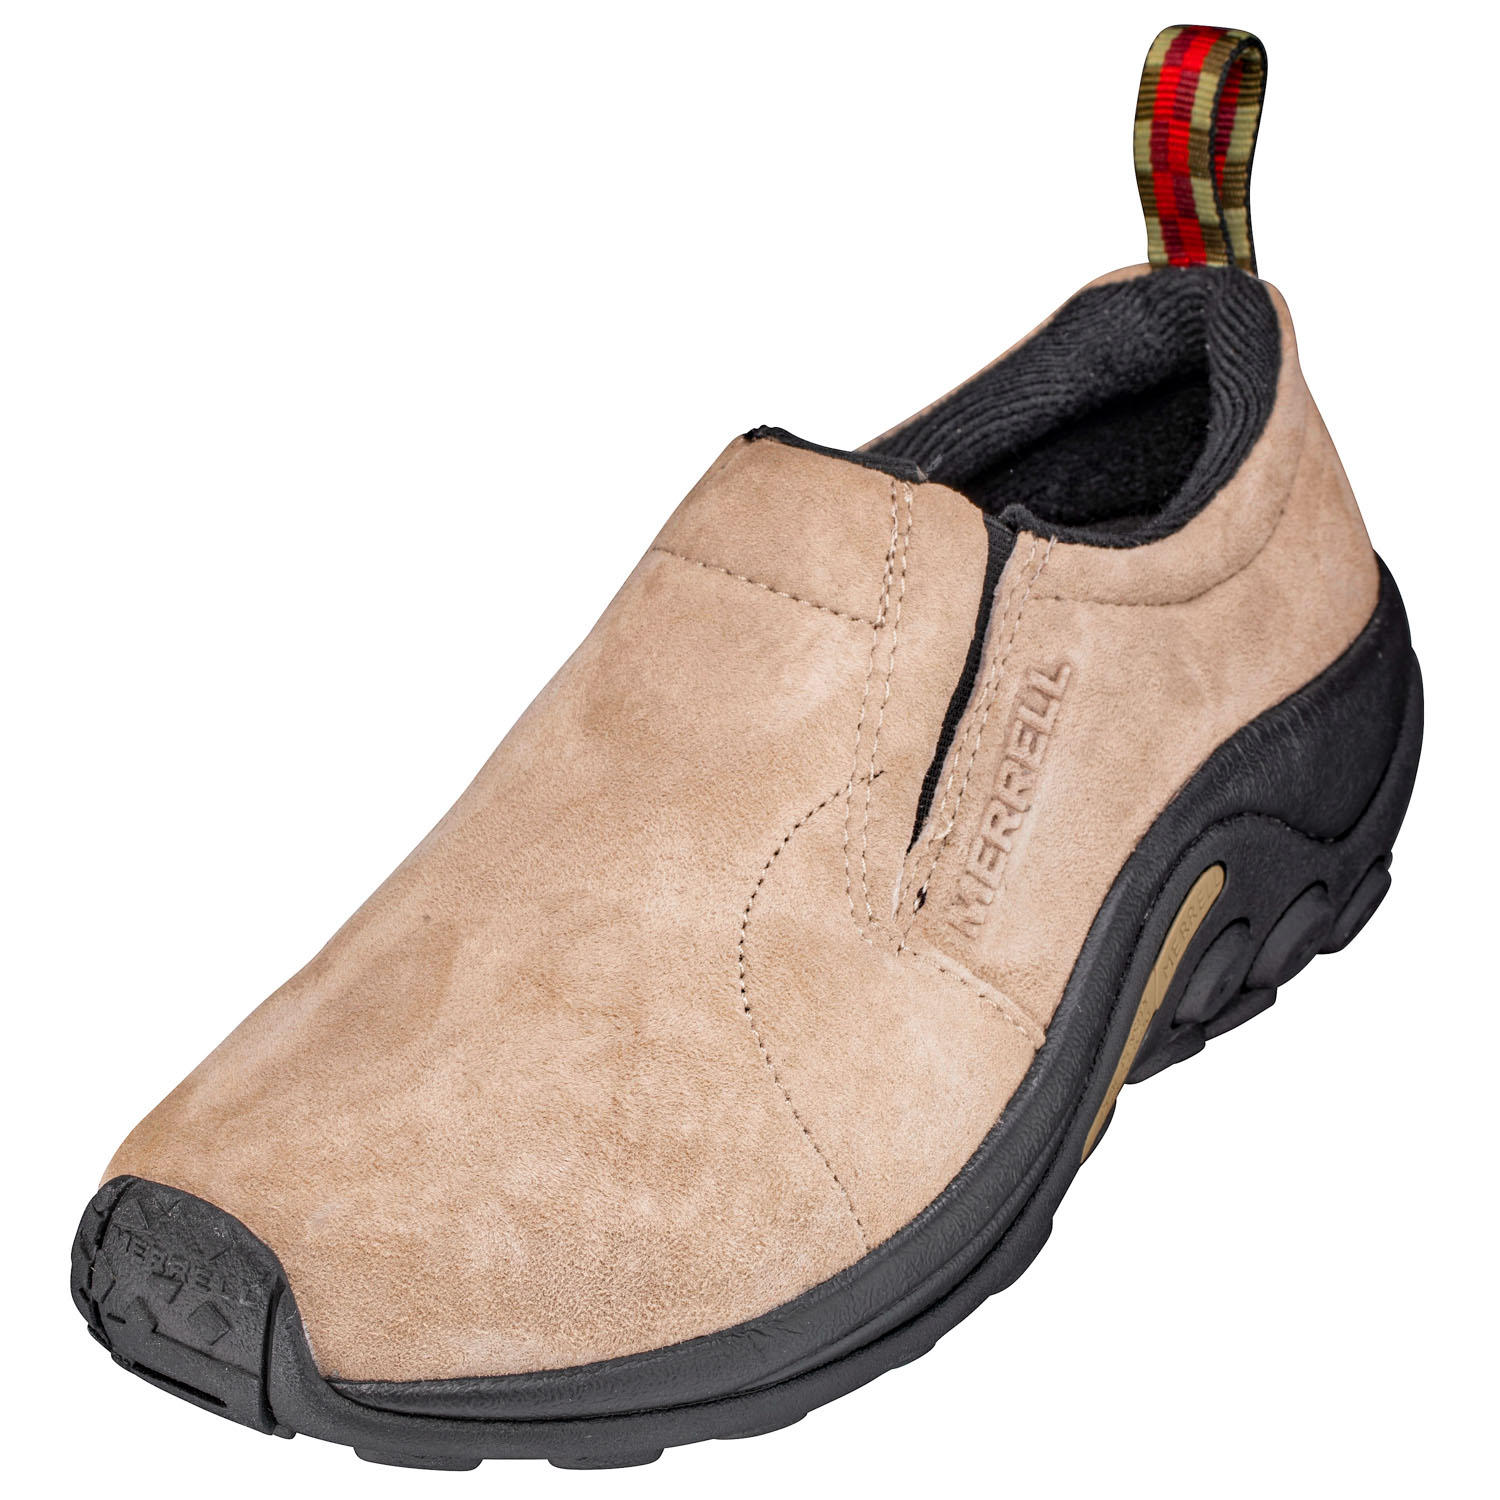 Sam's Club Members: Merrell Men's Jungle Moc Shoe (Taupe, Size 10) $29.80 + Free Shipping for Plus Members